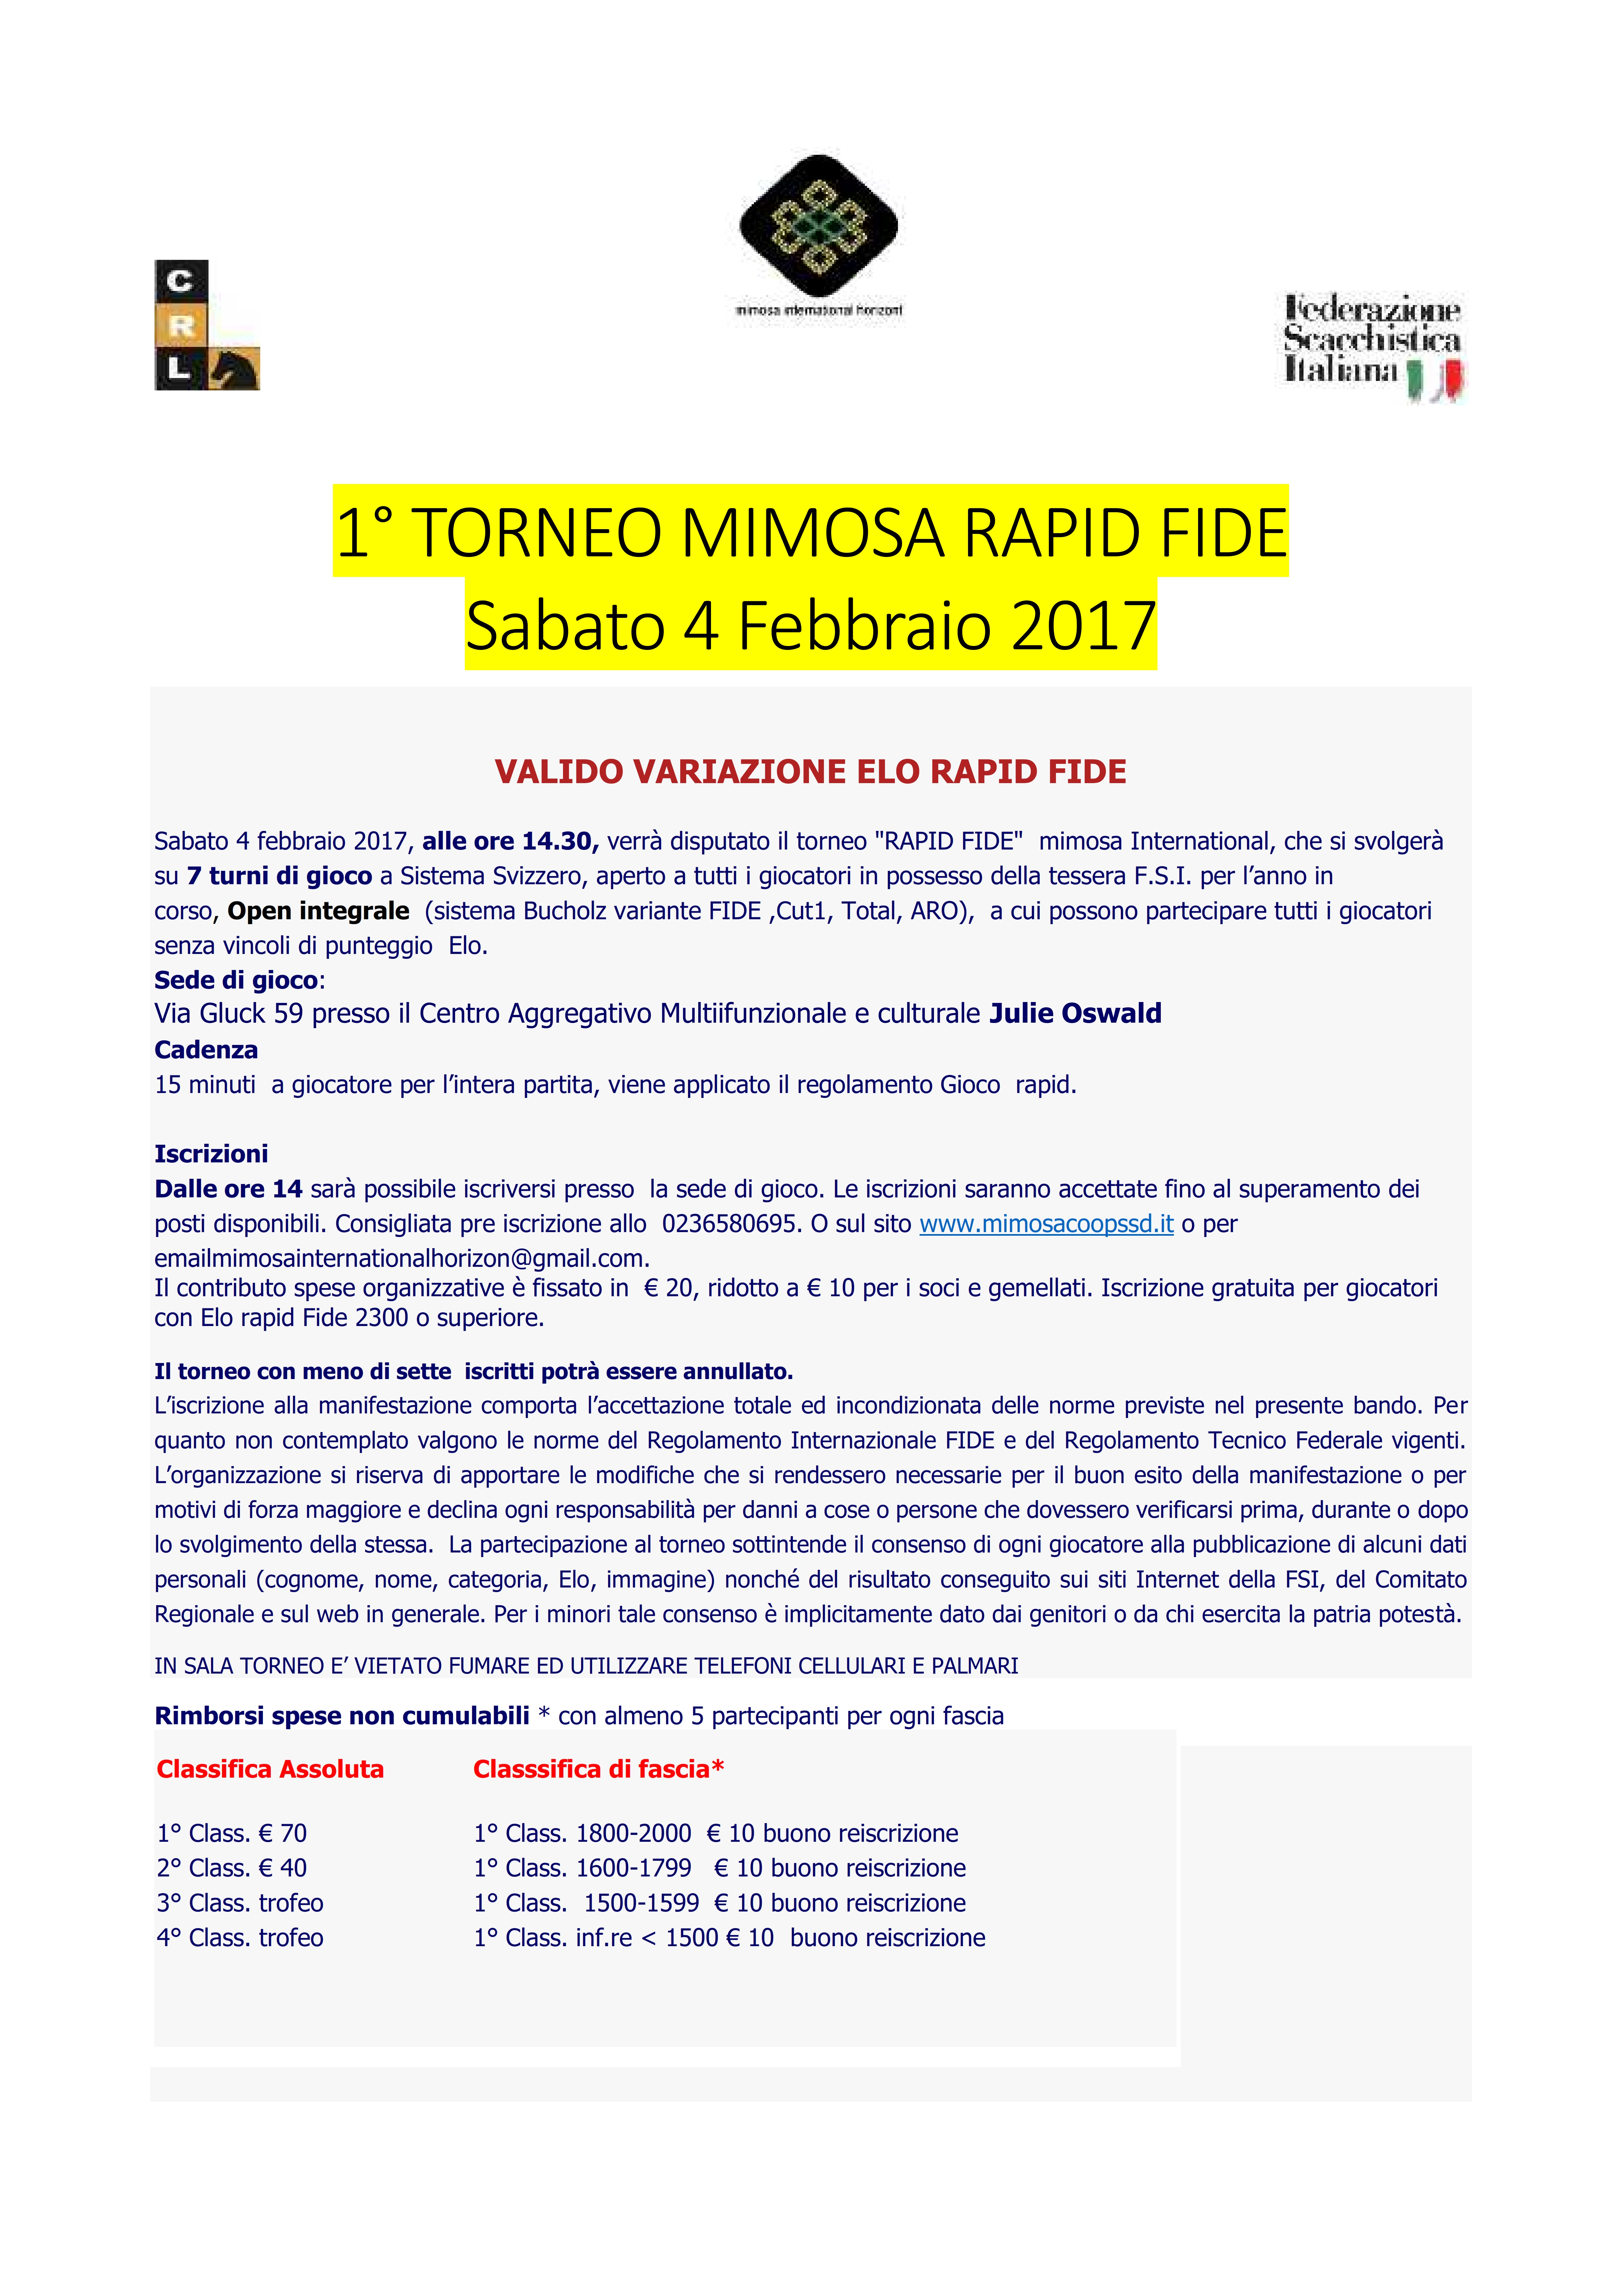 TORNEO RAPID FIDE 4 febbraio 2017_001